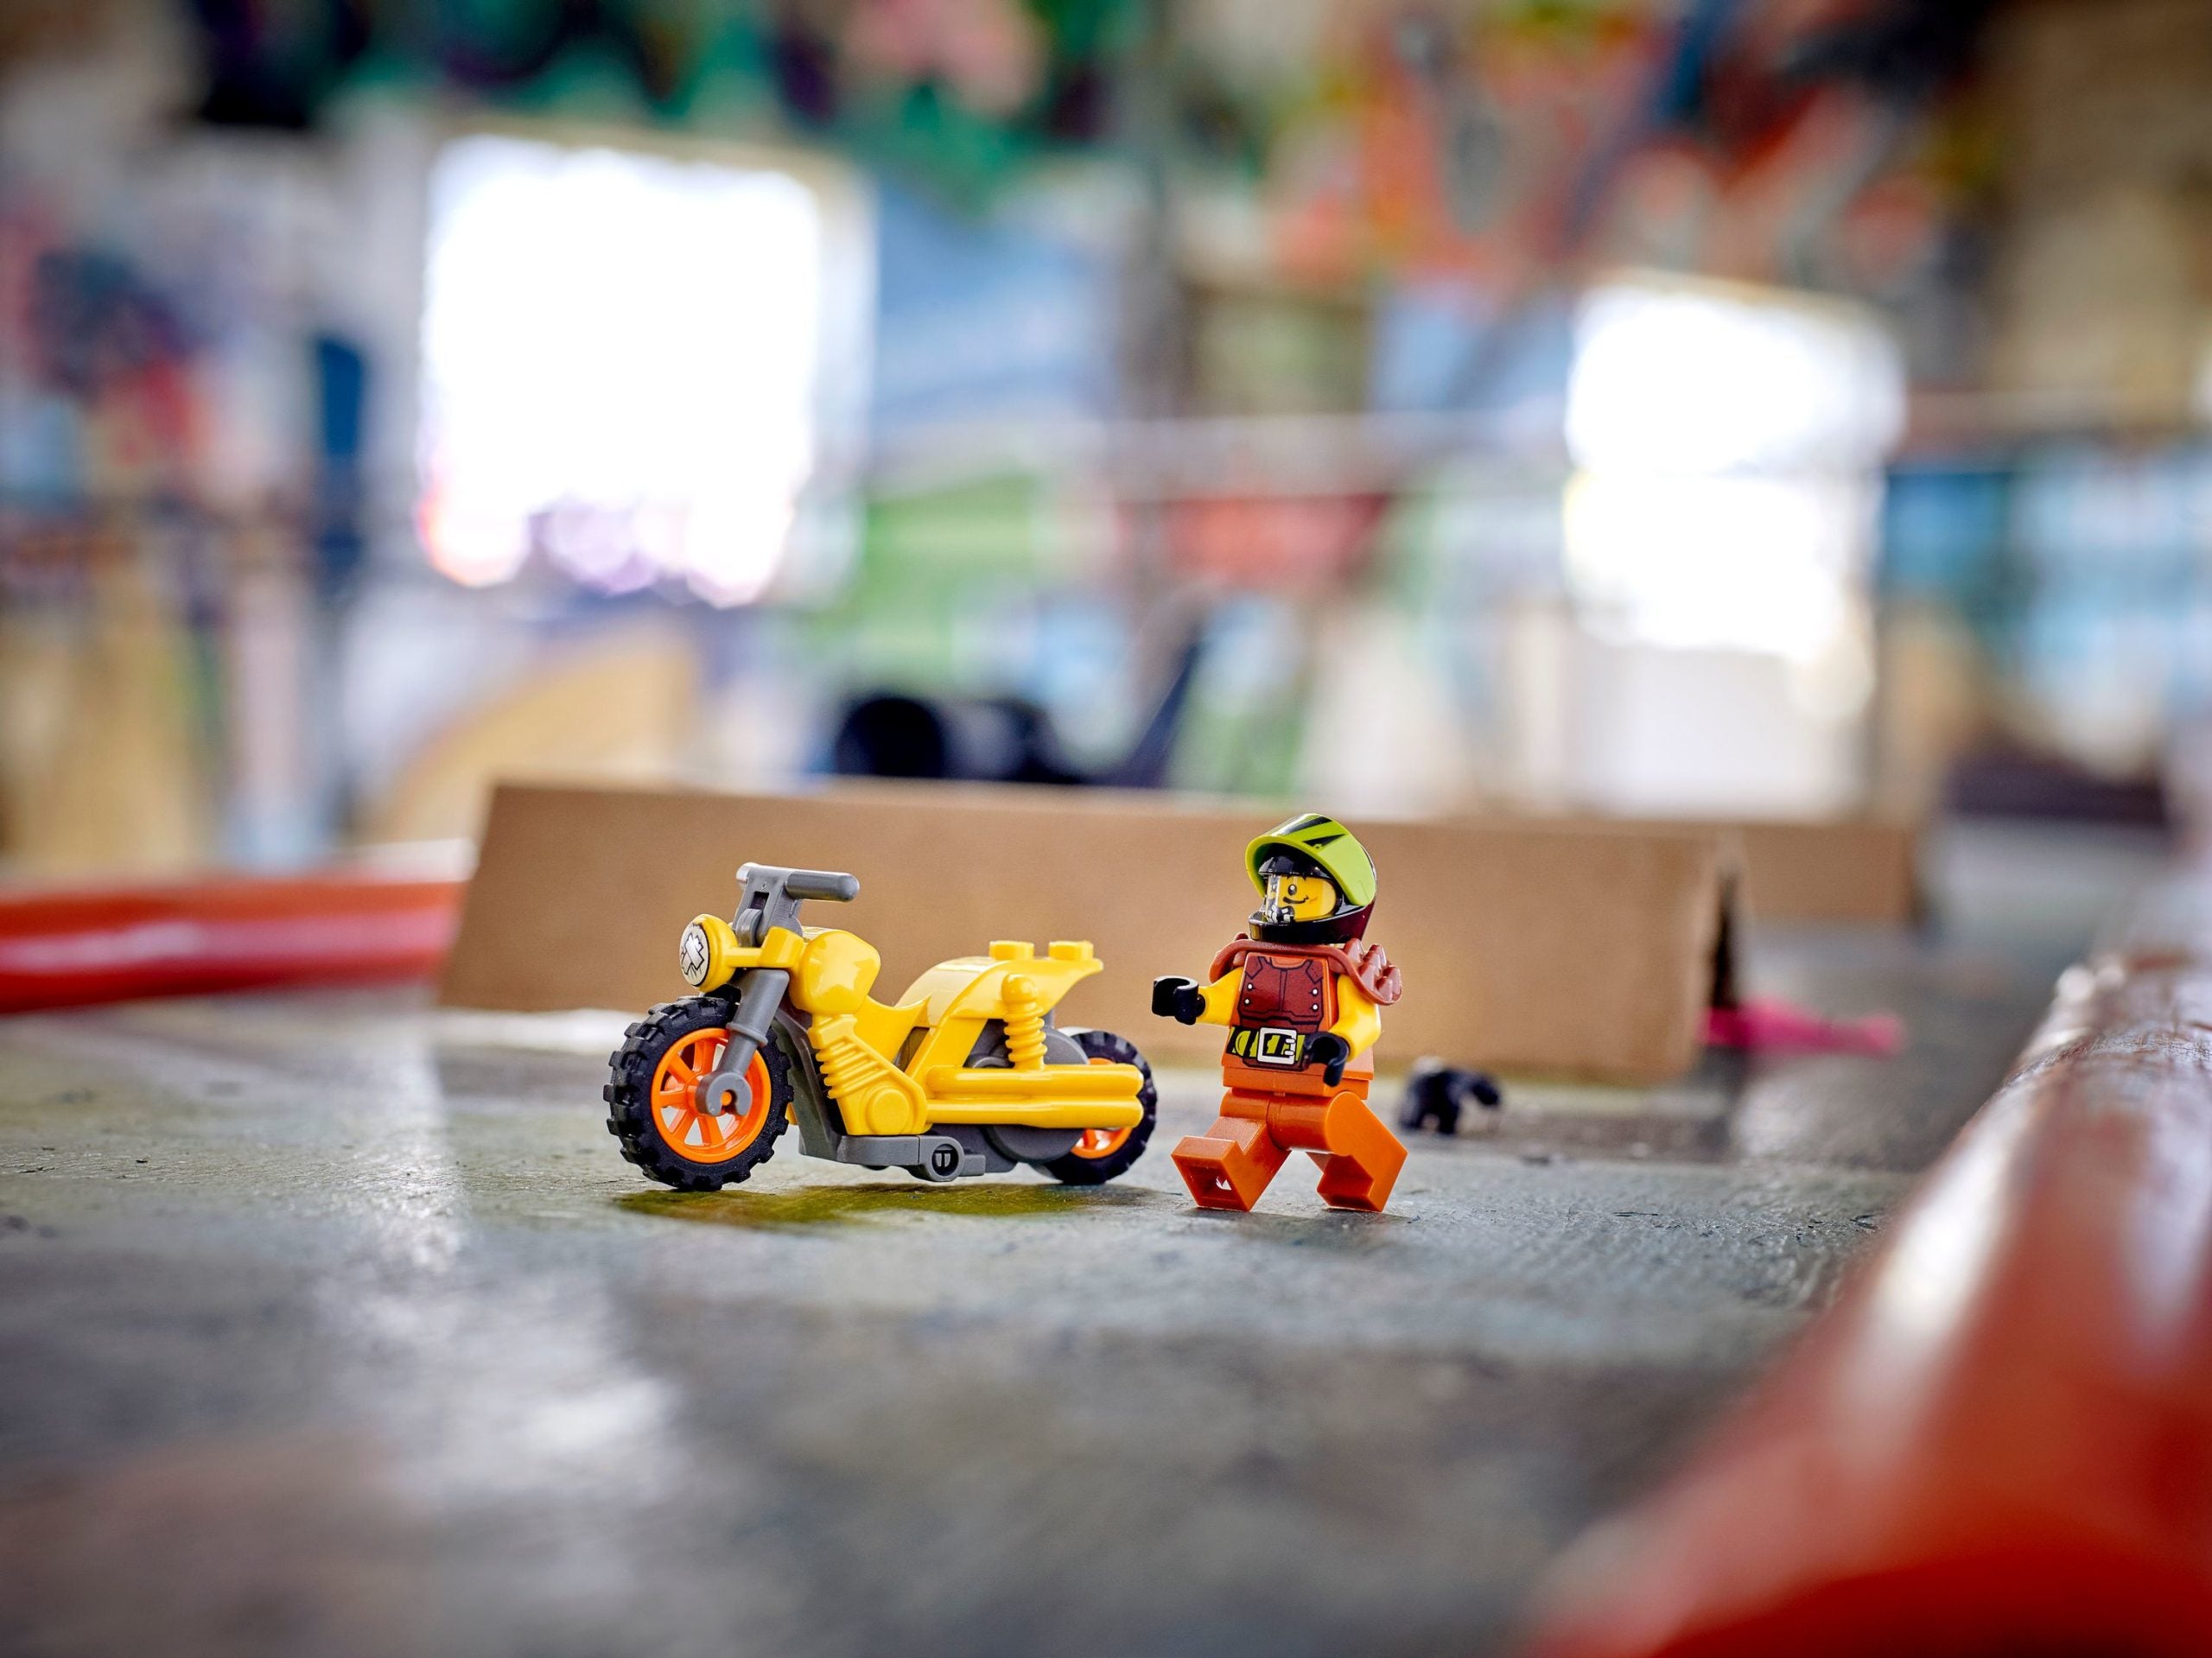 60297 LEGO® City - Stunt Bike da demolizione